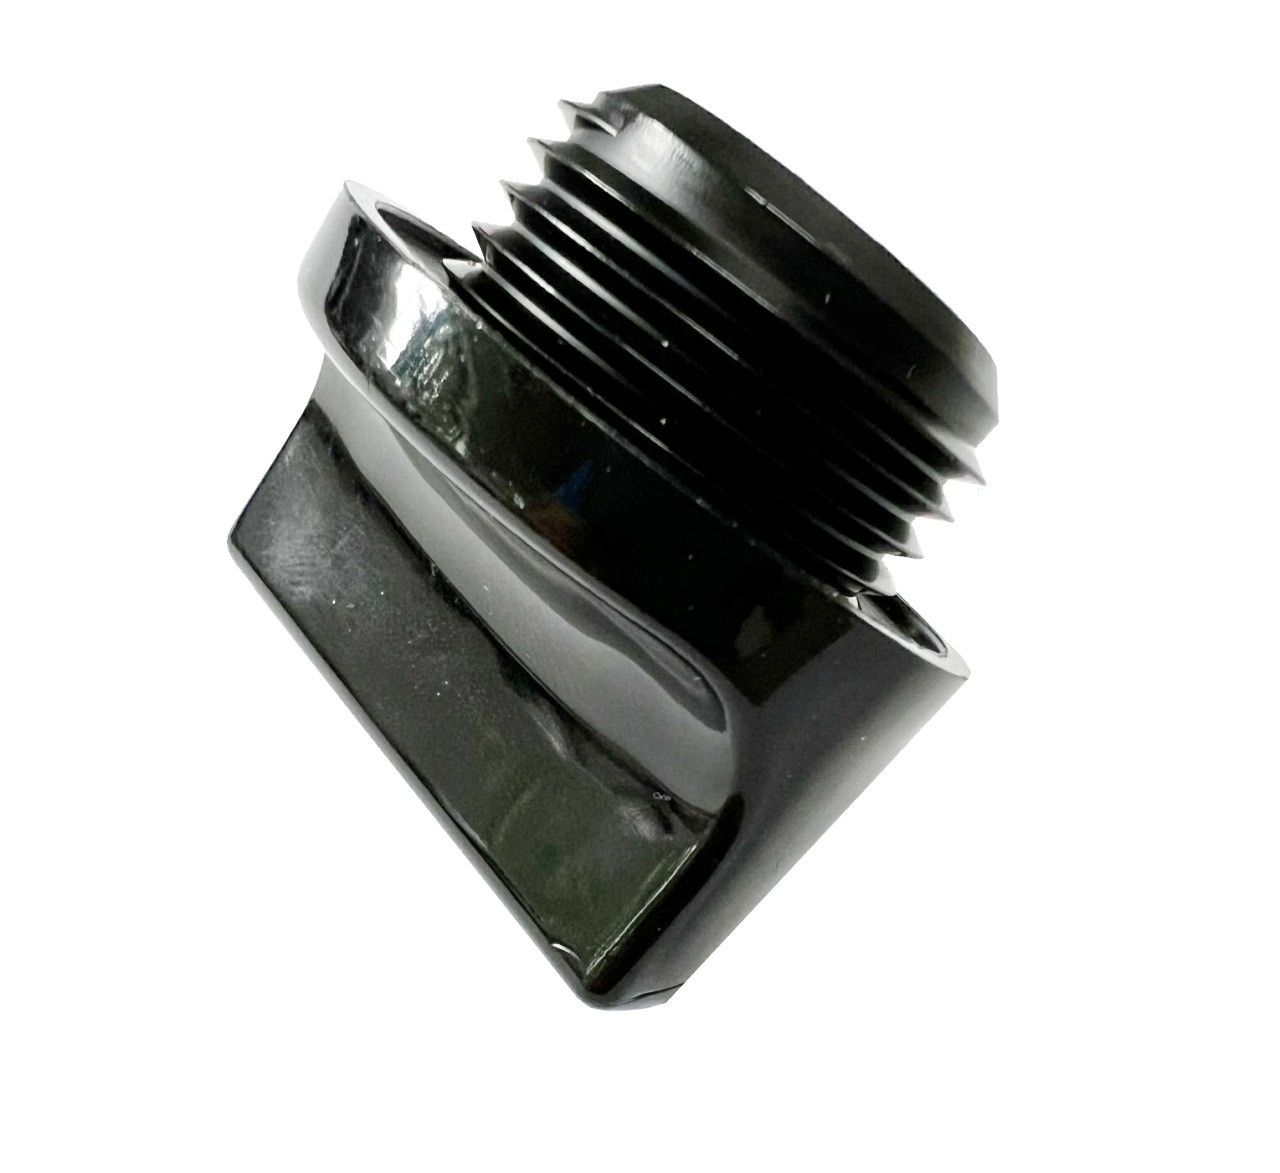 Perkins 400J range  Oil filler cap, from parts4engines.com